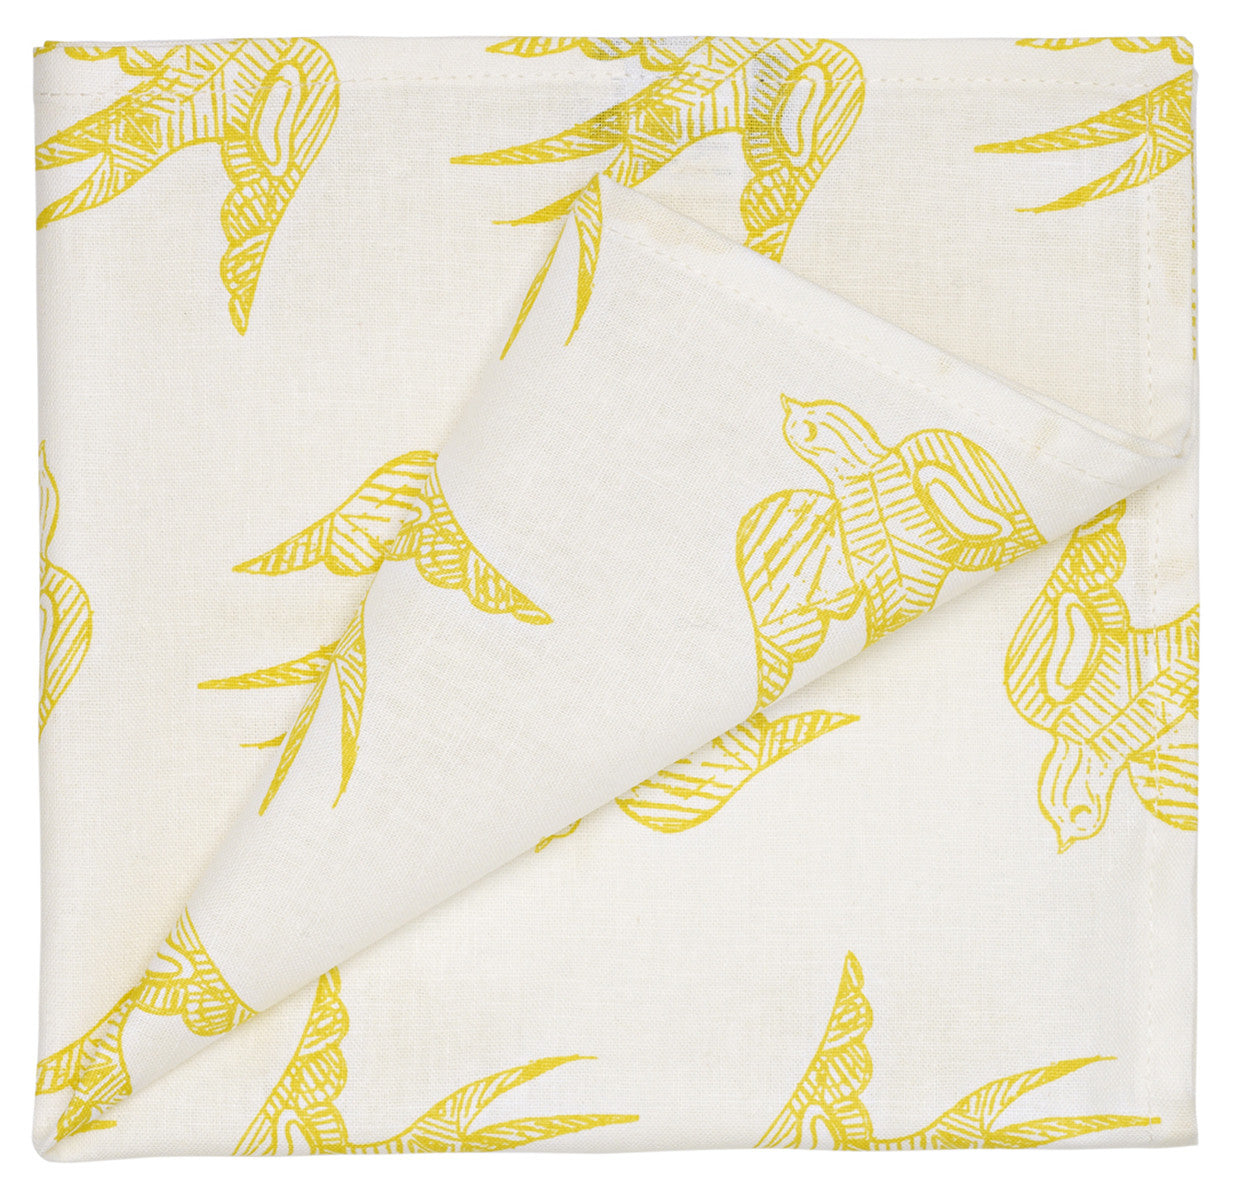 Katia Swallow Pattern Linen Napkins in Bright Maize Yellow